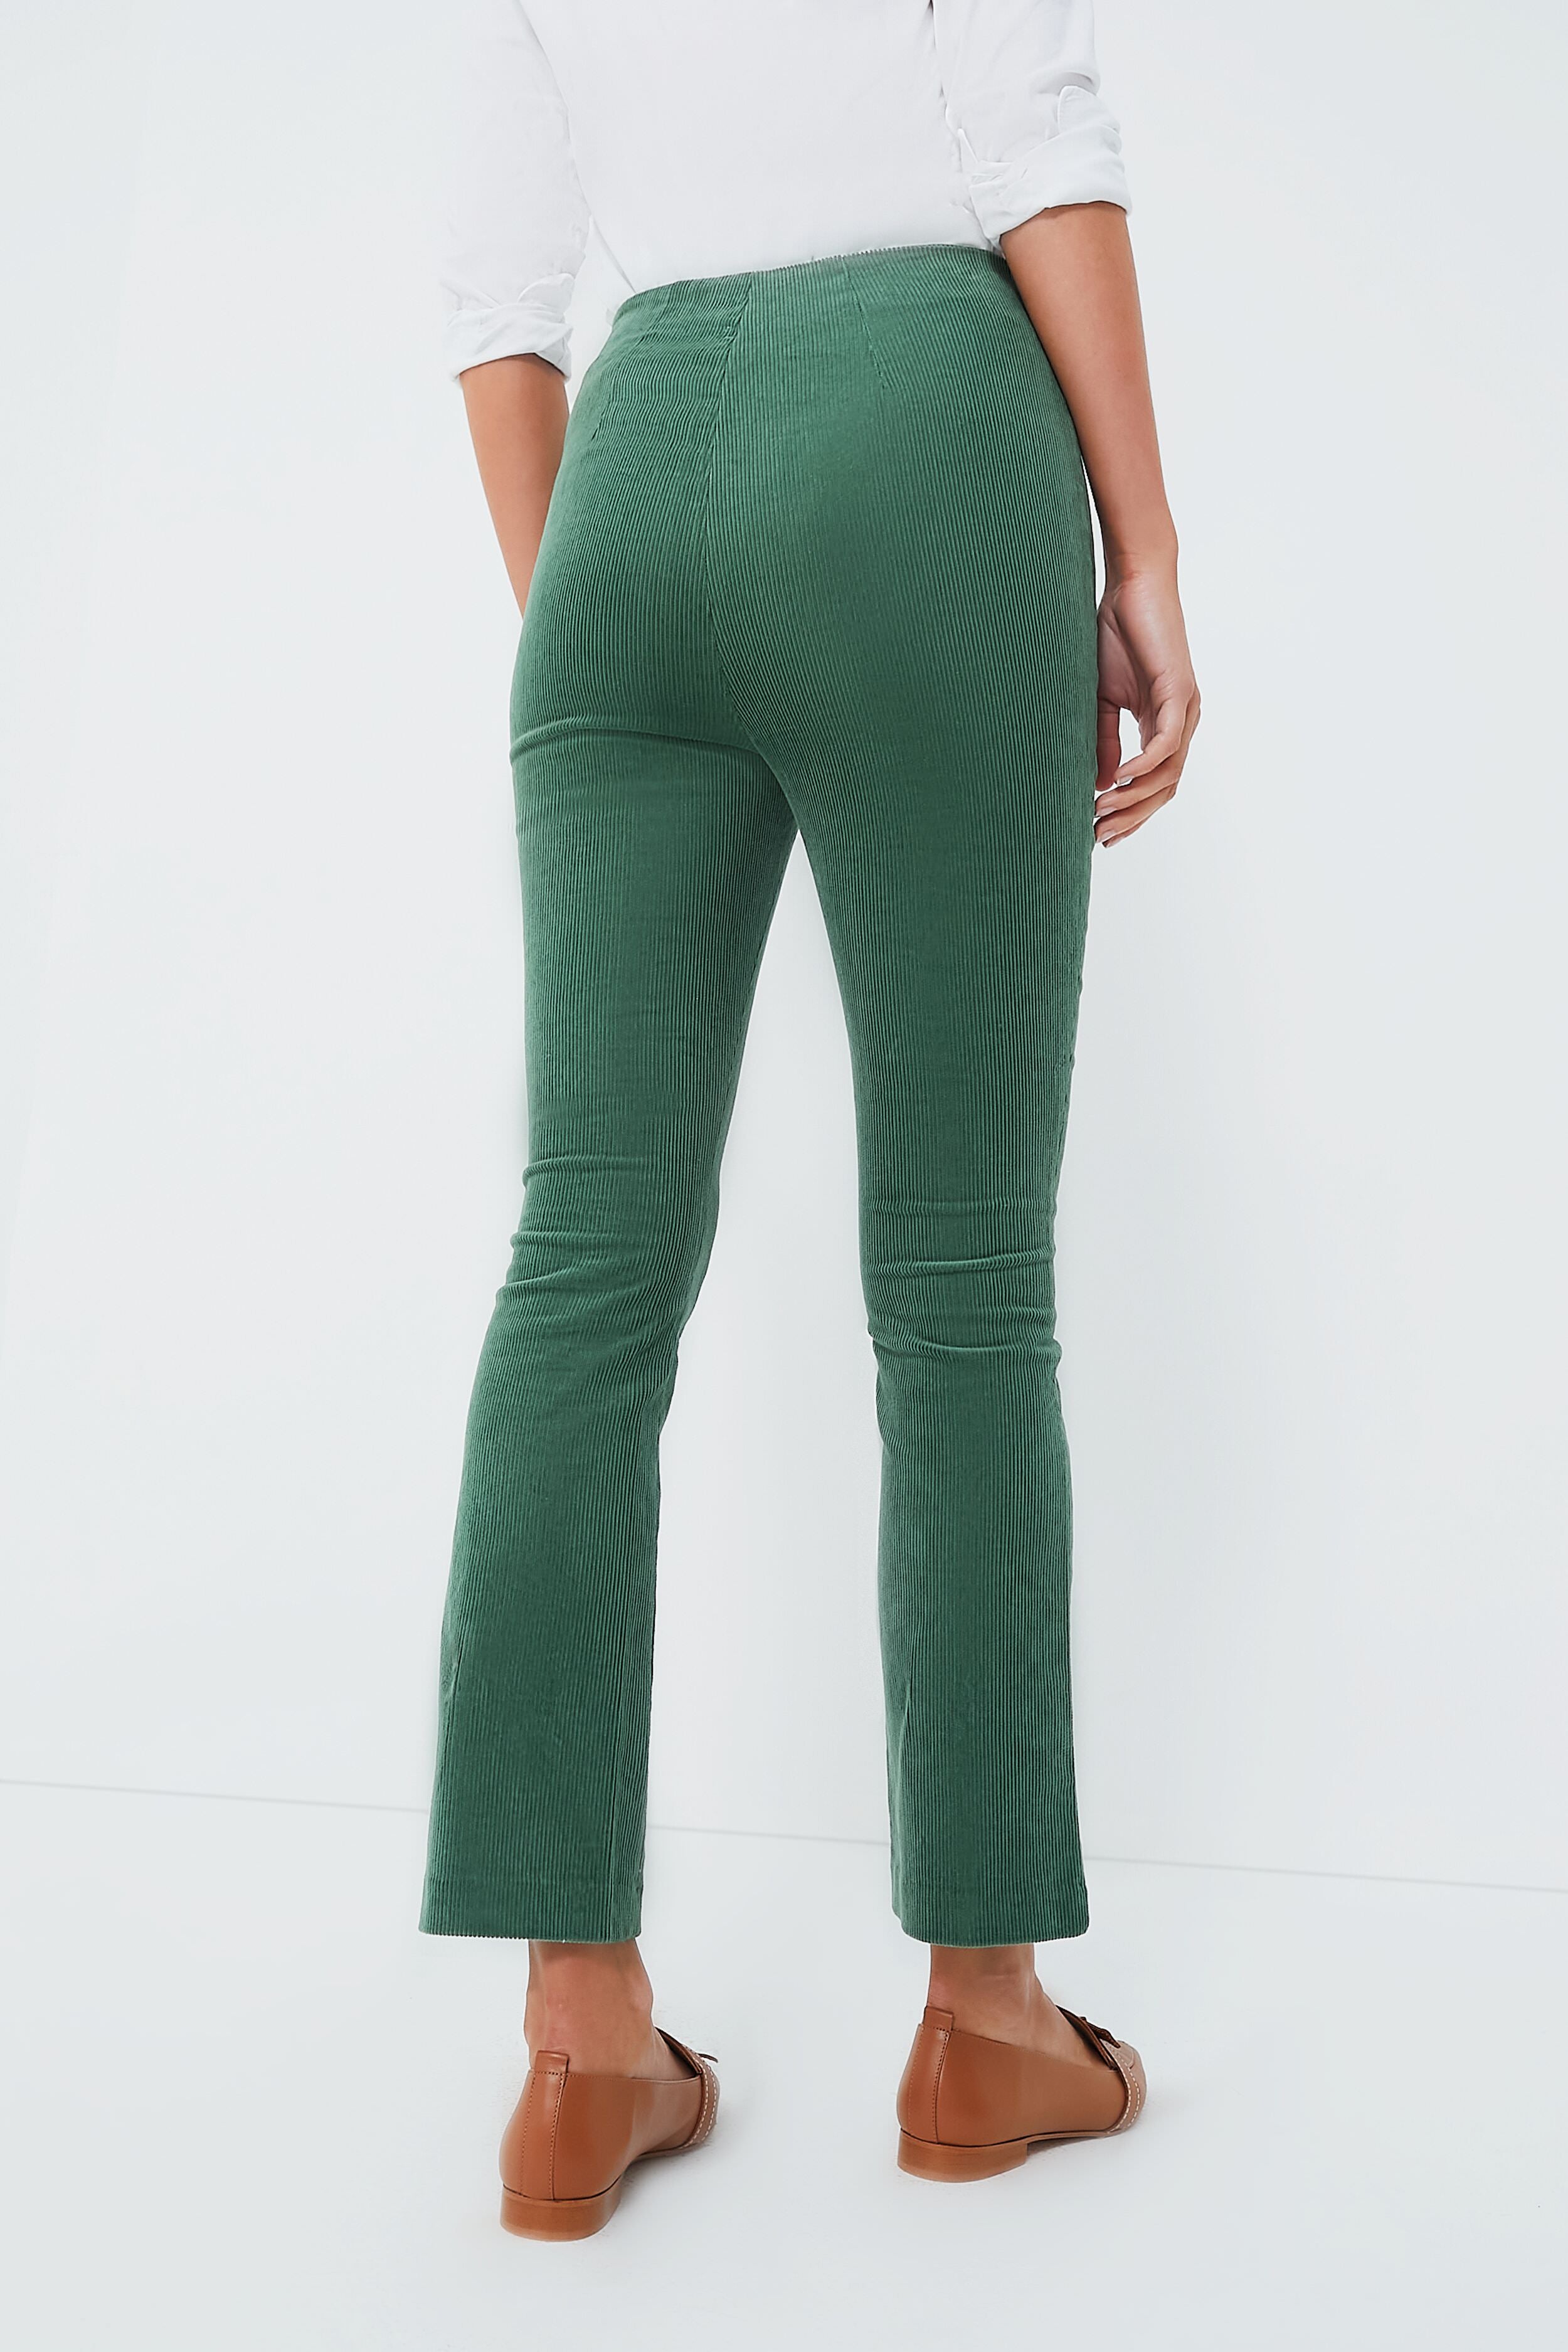 Green Corduroy Pants Women, High Waisted Pants, Loose Fit Corduroy Slacks,  Elastic Waist Pants With Pocket, Plus Size Pants Ylistyle C2555 - Etsy